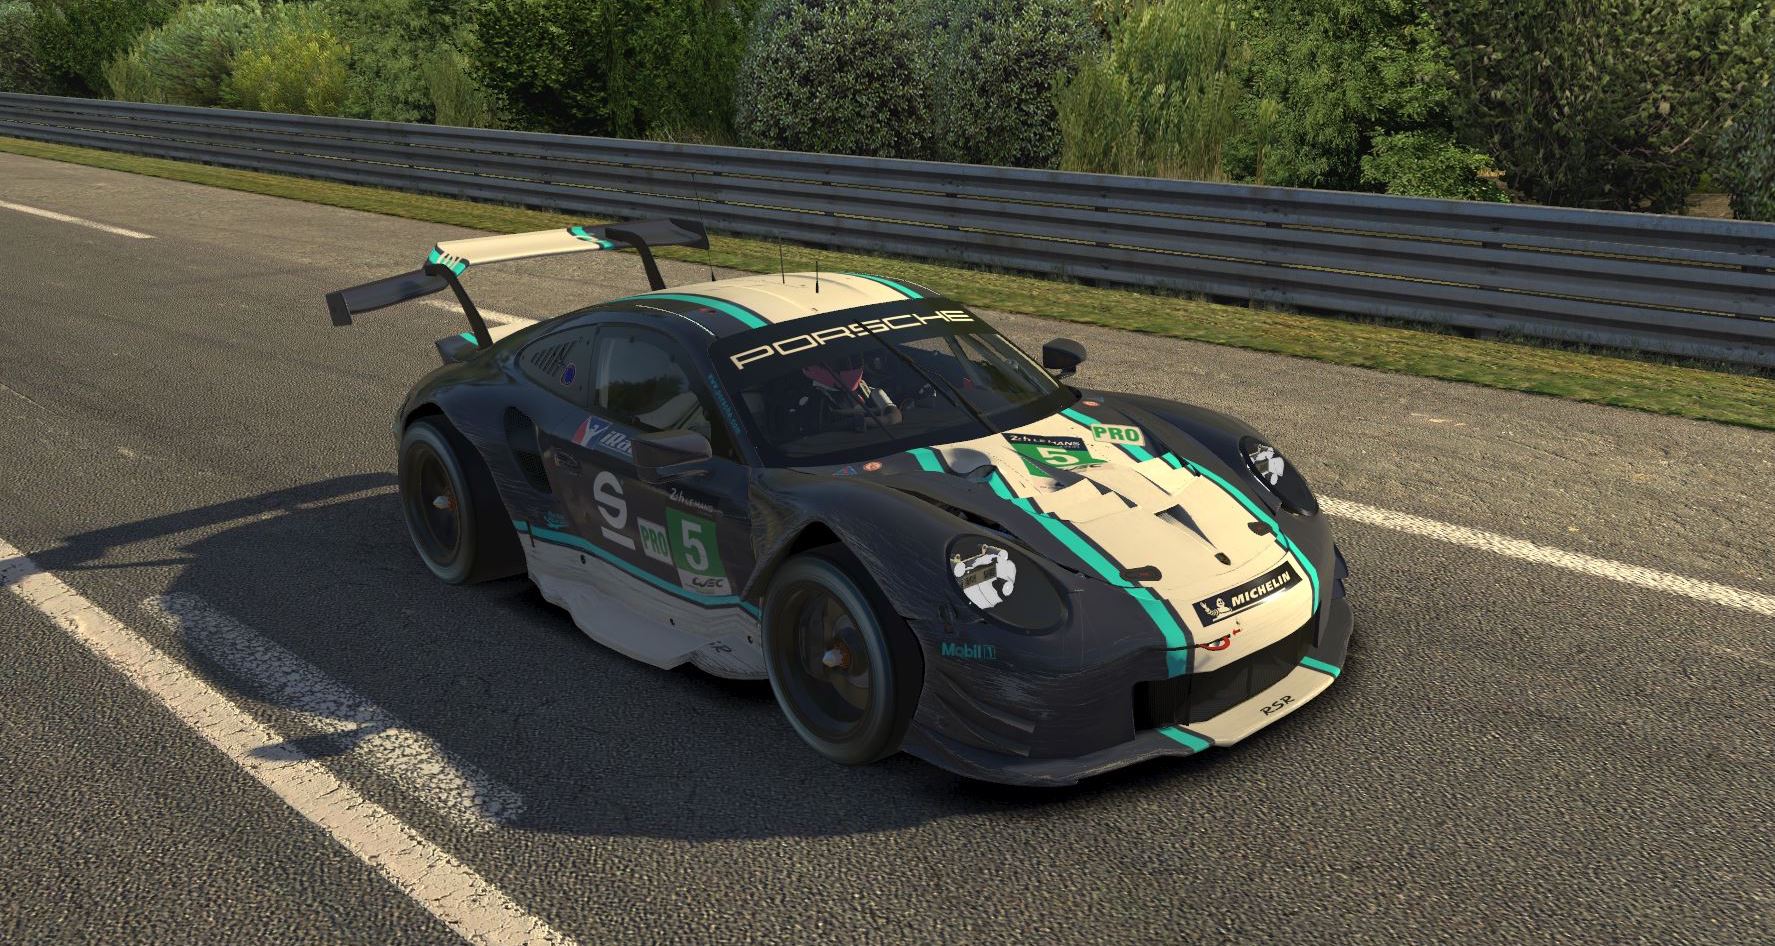 iracing – Porsche 911 RSR at Le Mans 24h